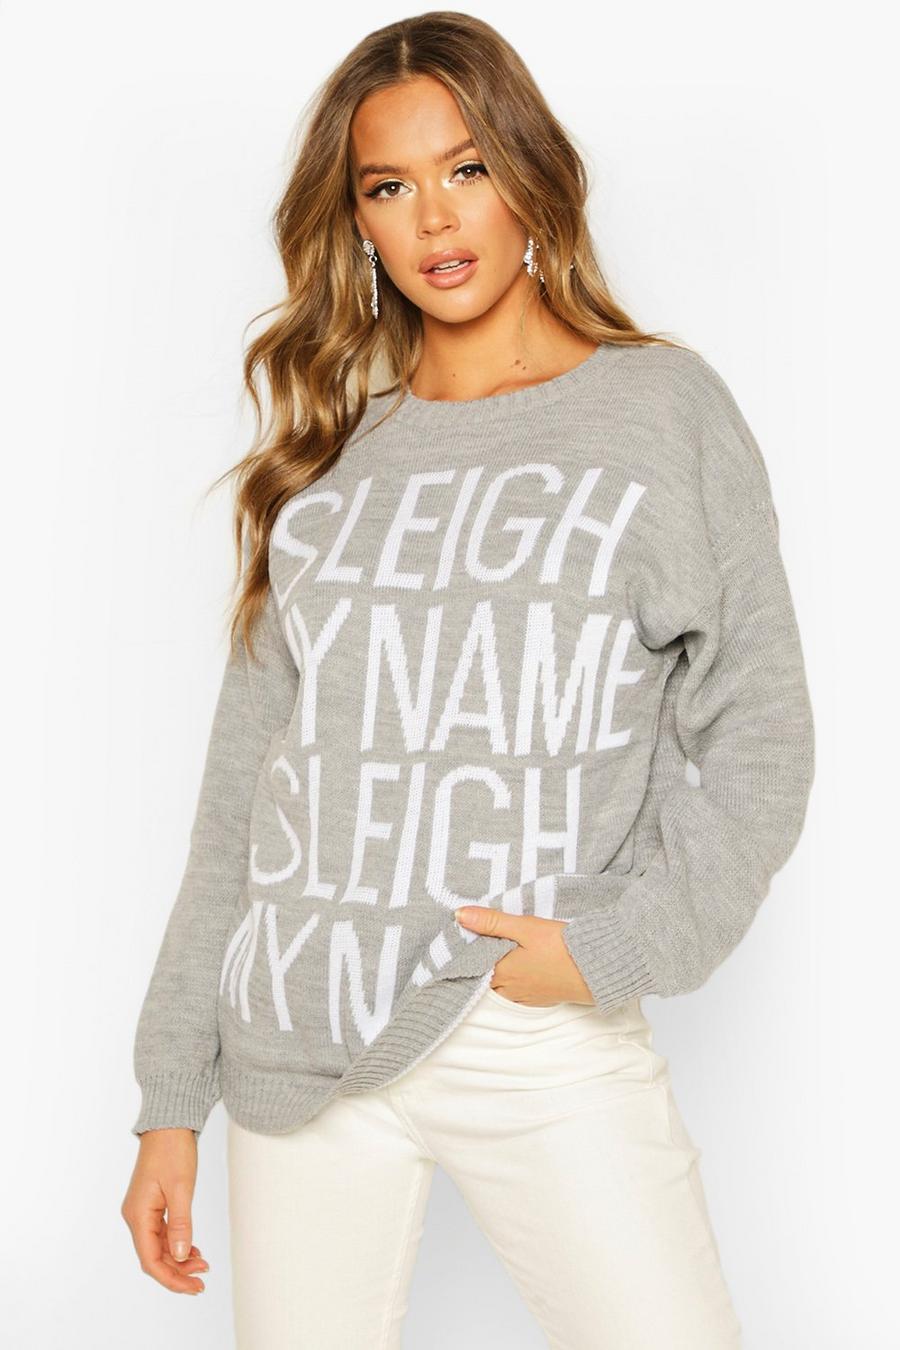 Sleigh My Name Slogan Christmas Sweater image number 1